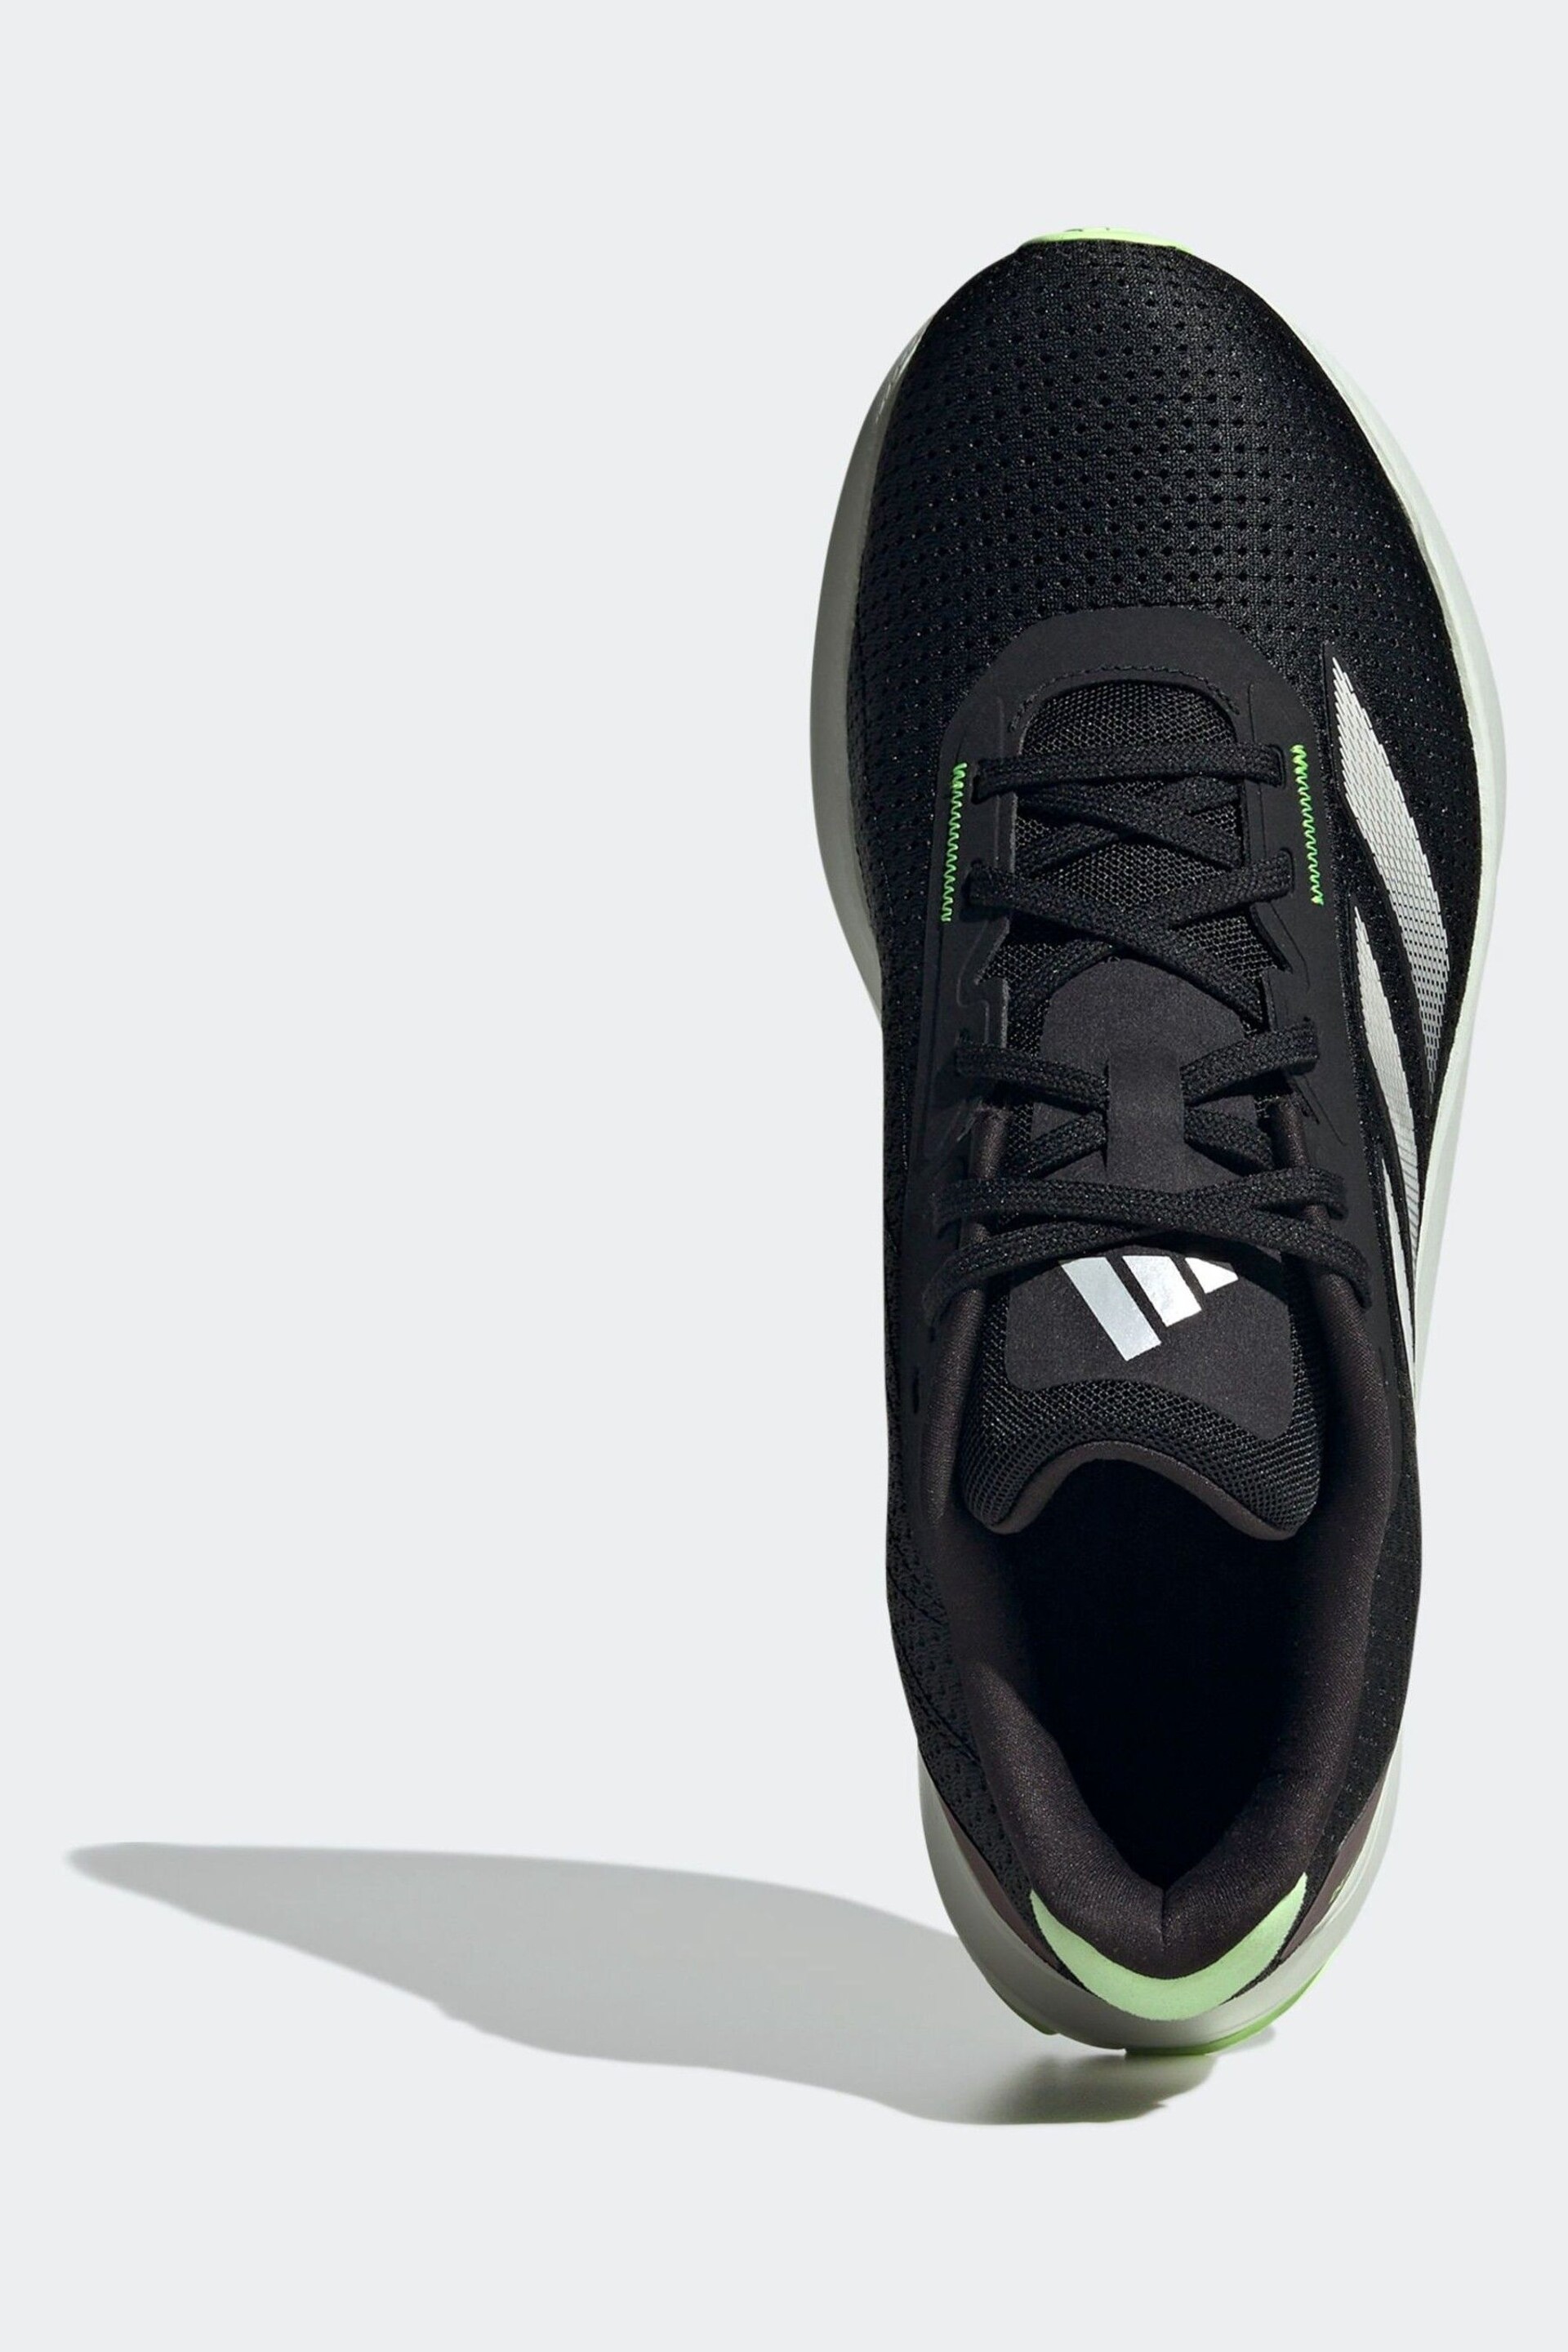 adidas Black/Yellow Duramo SL Trainers - Image 5 of 8